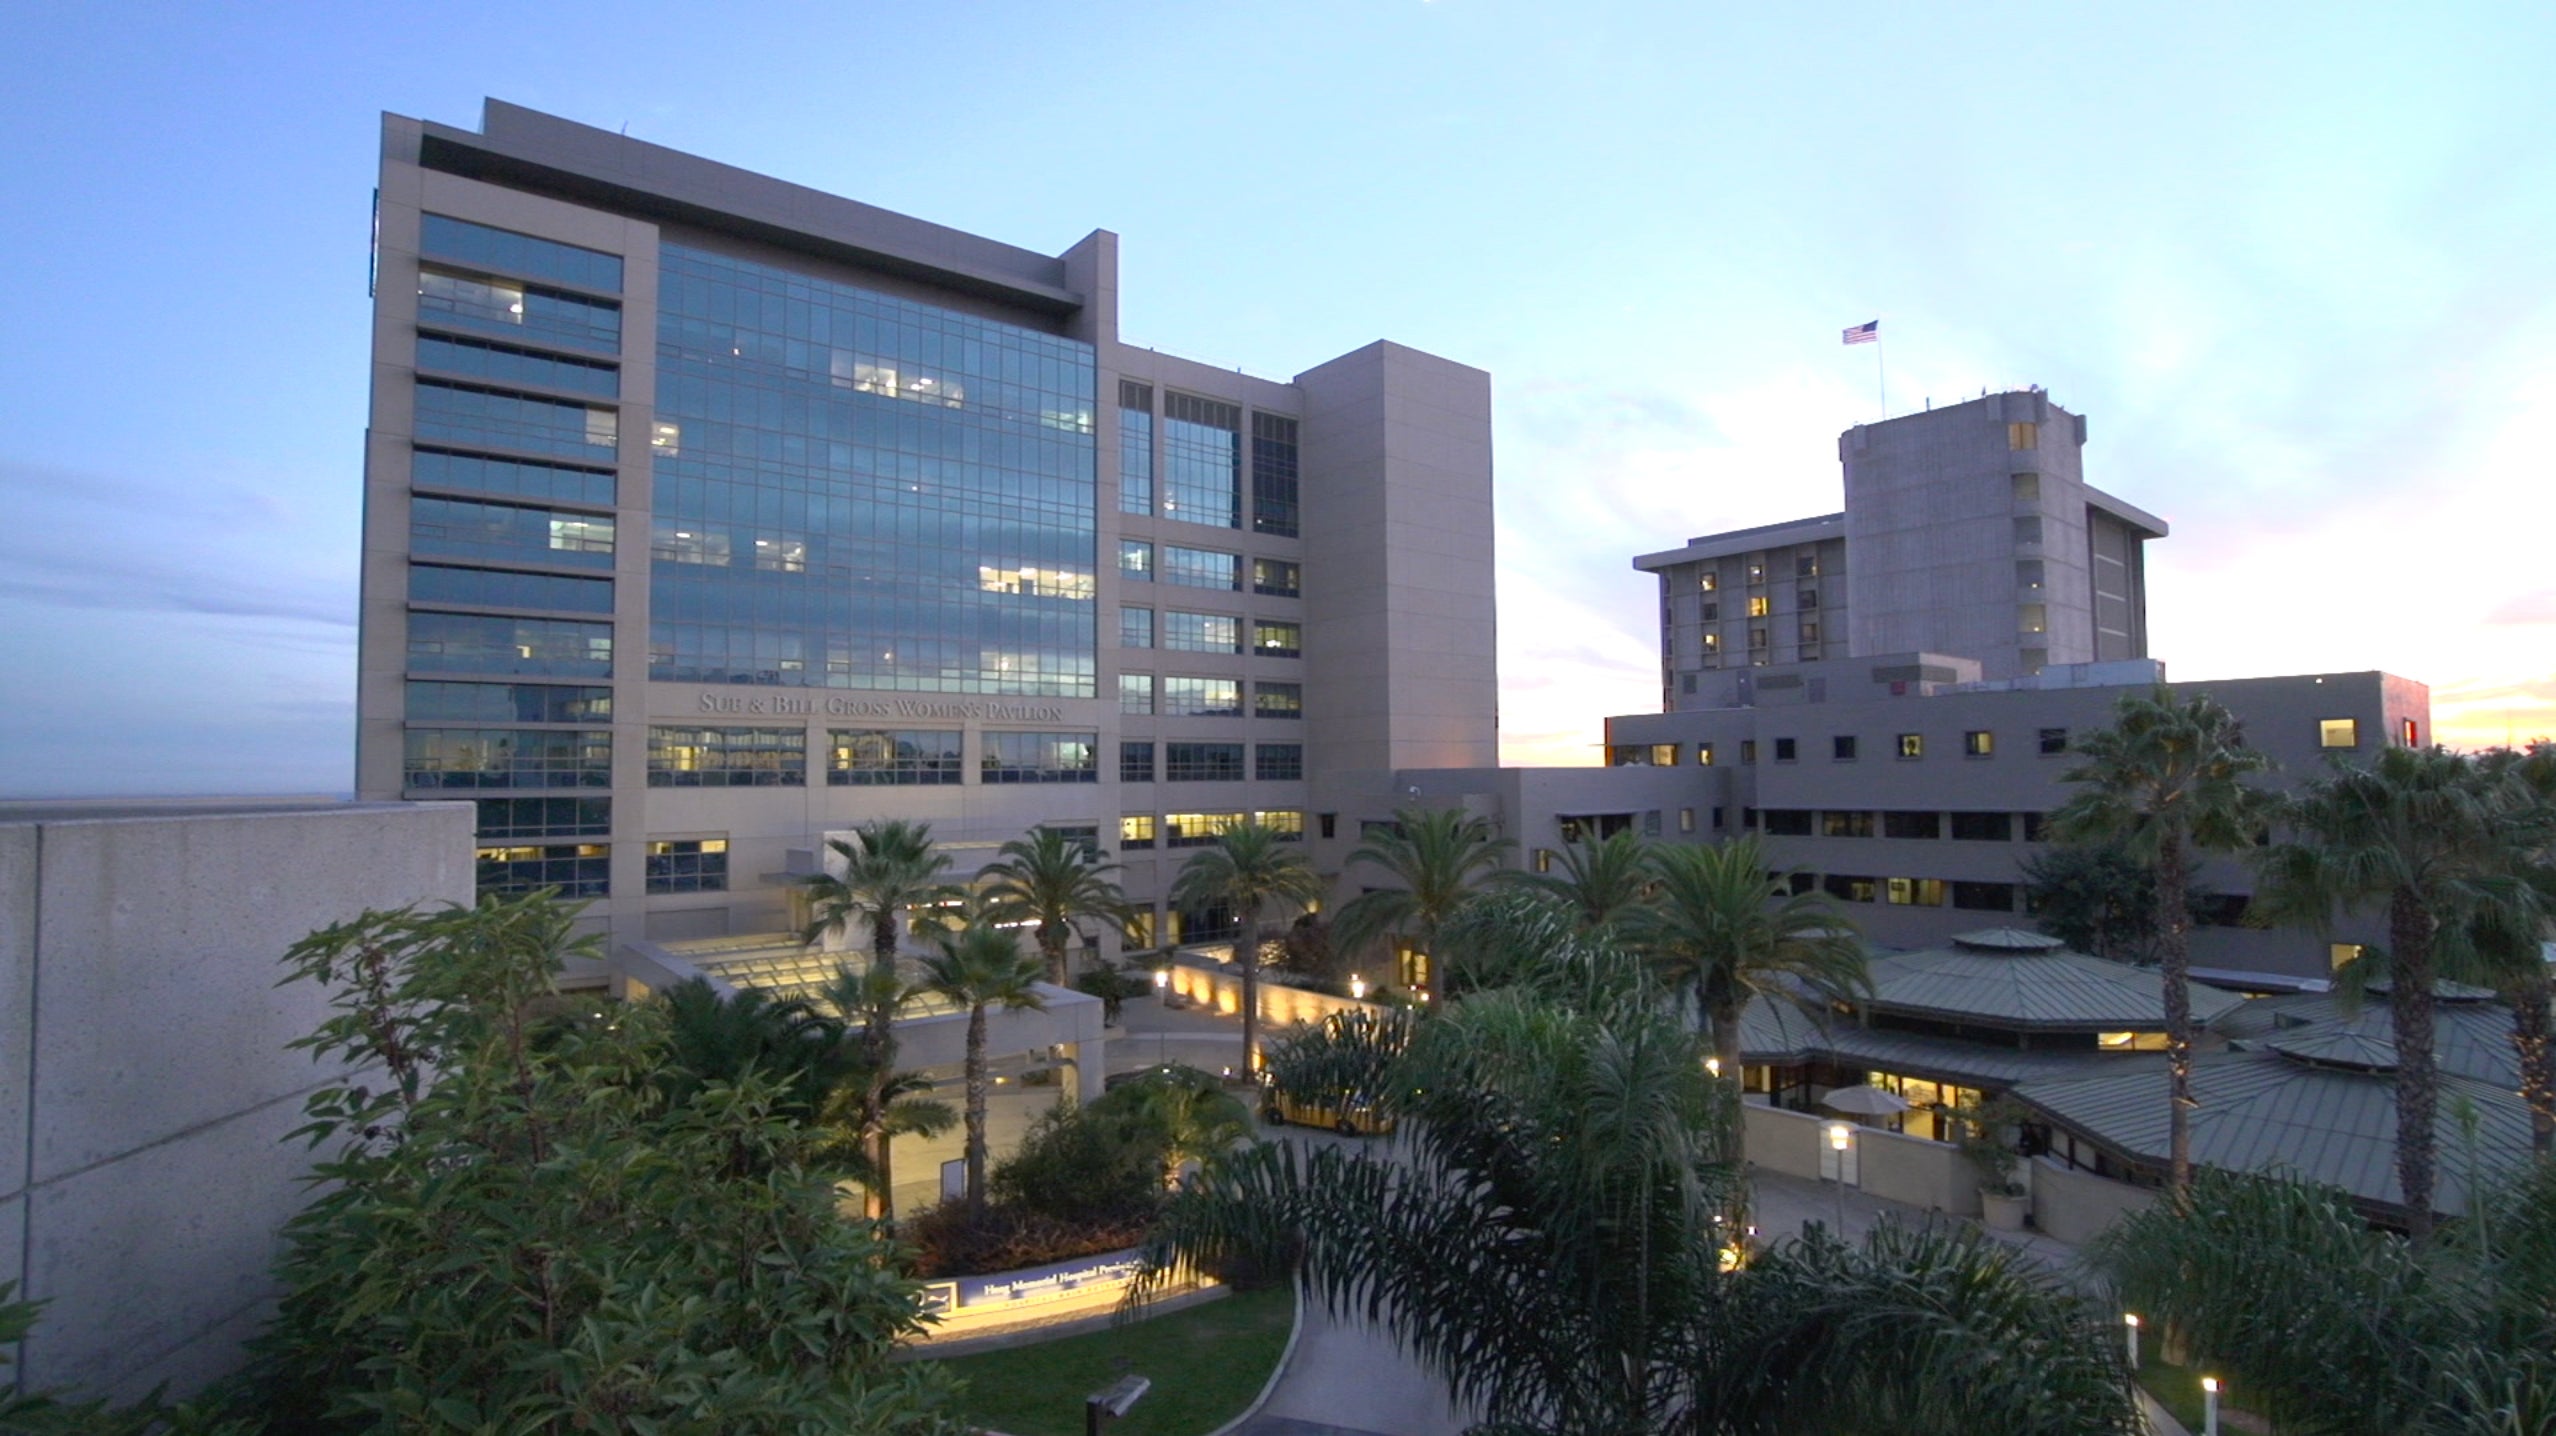 Hoag Hospital in Newport Beach